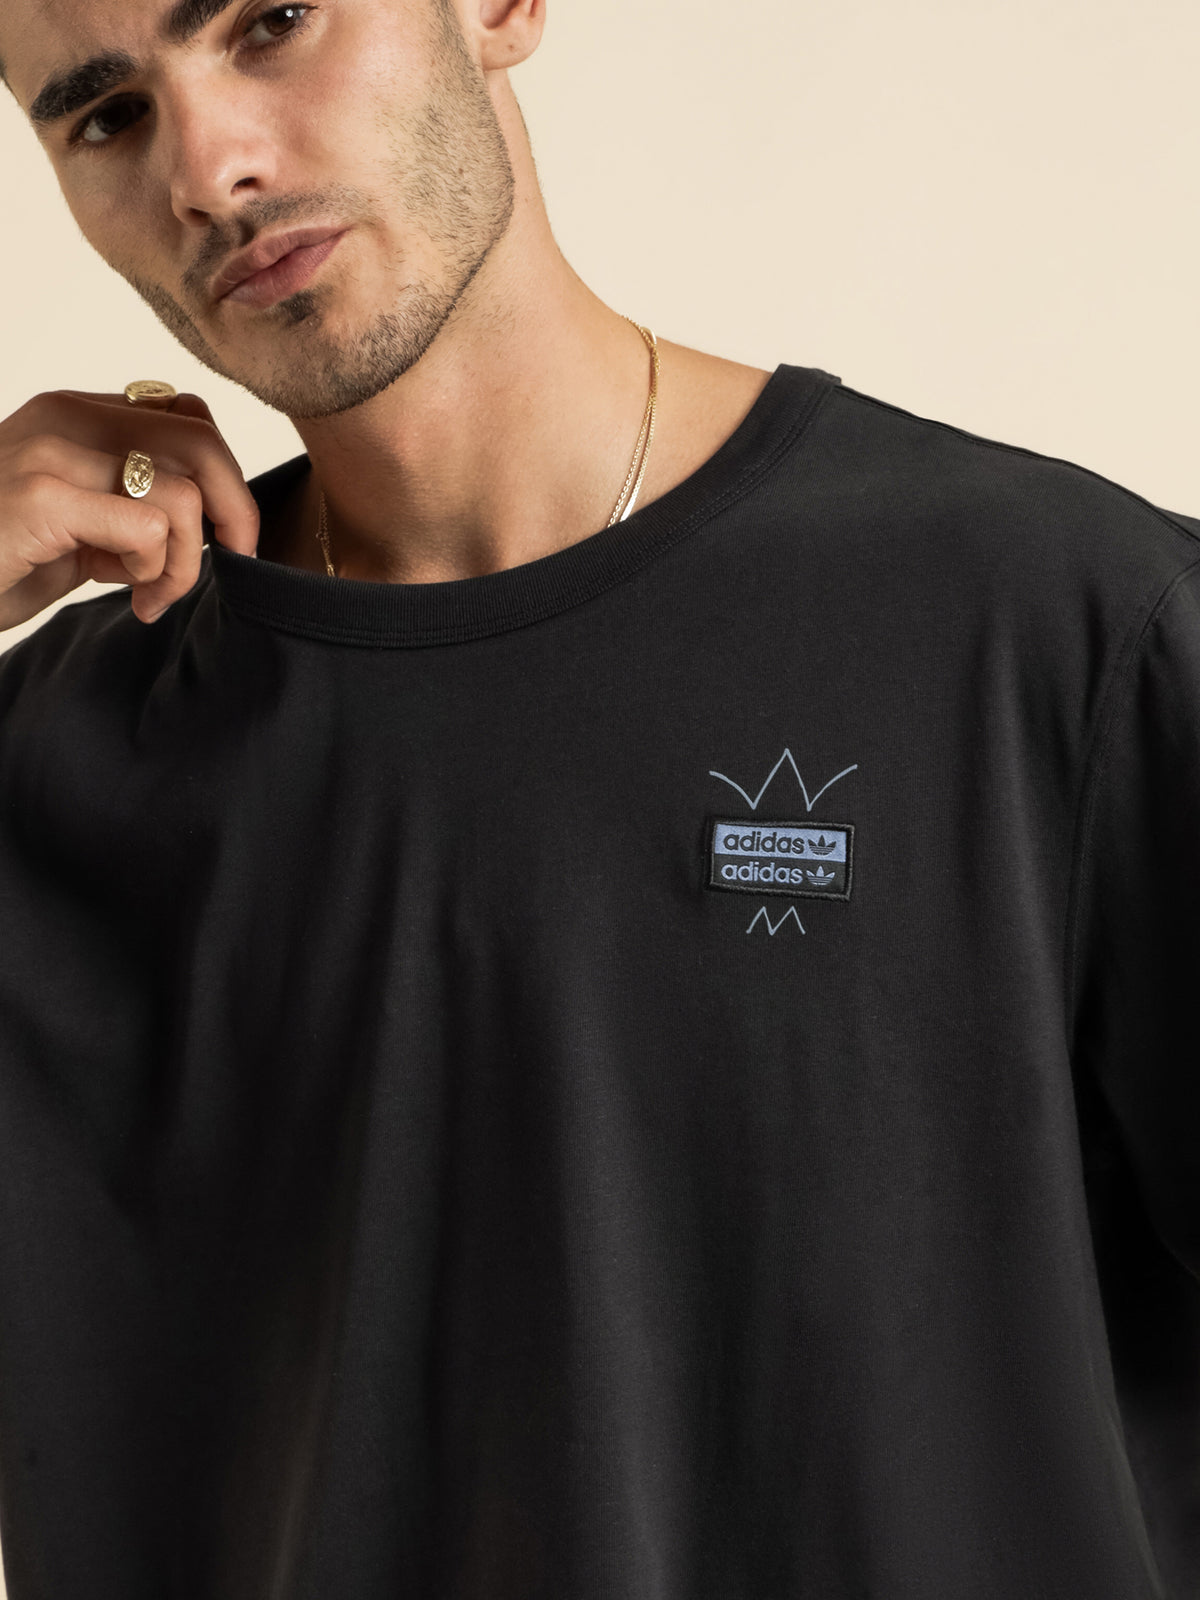 R.Y.V Abstract Original T-Shirt in Black